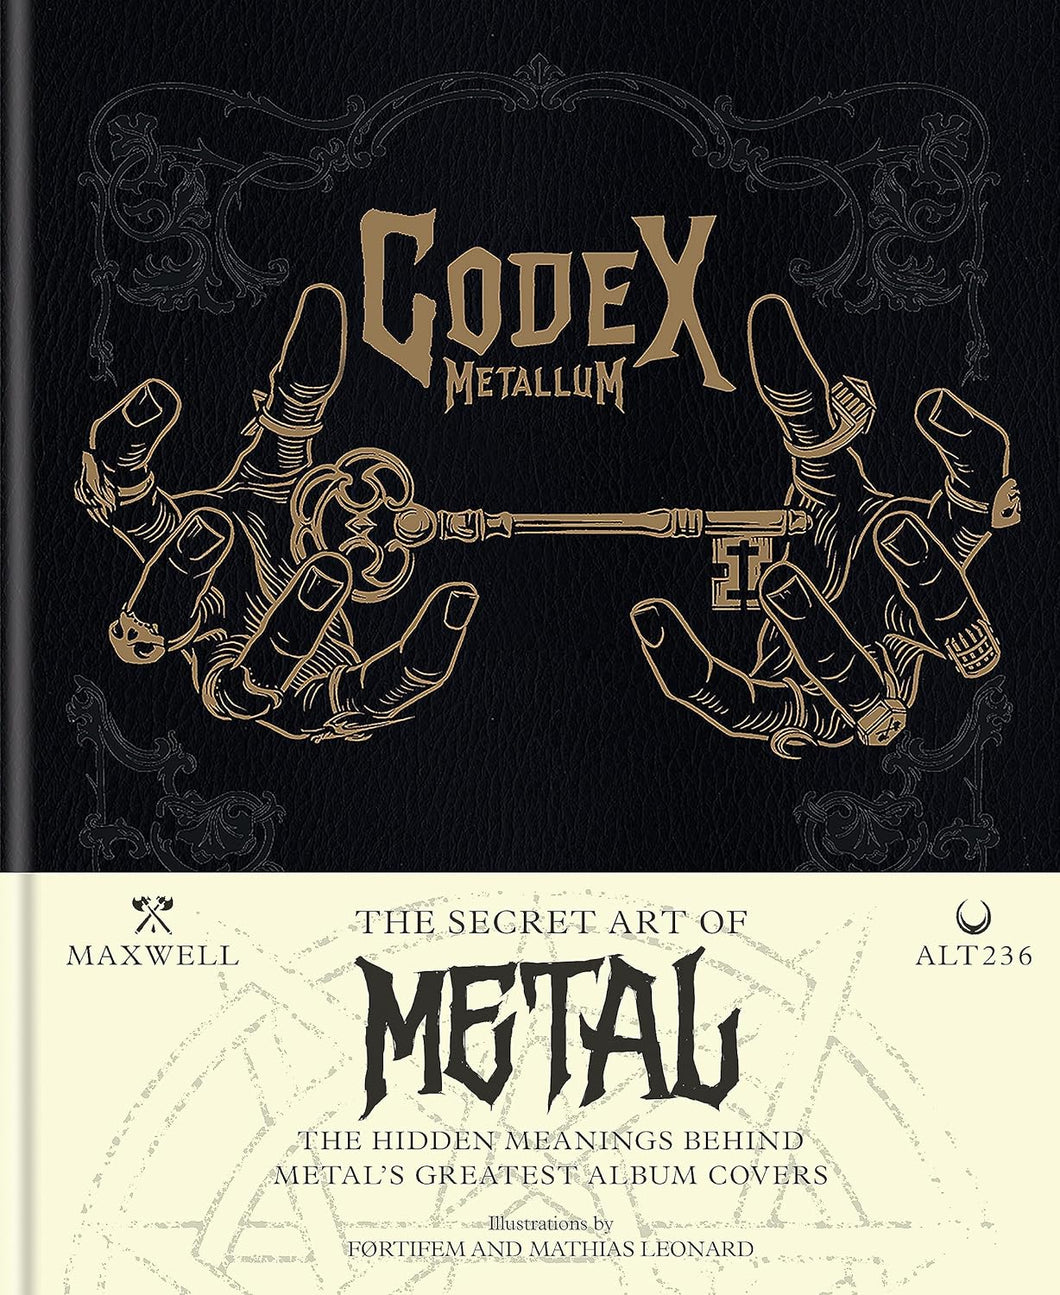 Maxwell & Alt236- Codex Metallium: The Secret Art Of Metal - The Hidden Meanings Behind Metal's Greatest Album Covers